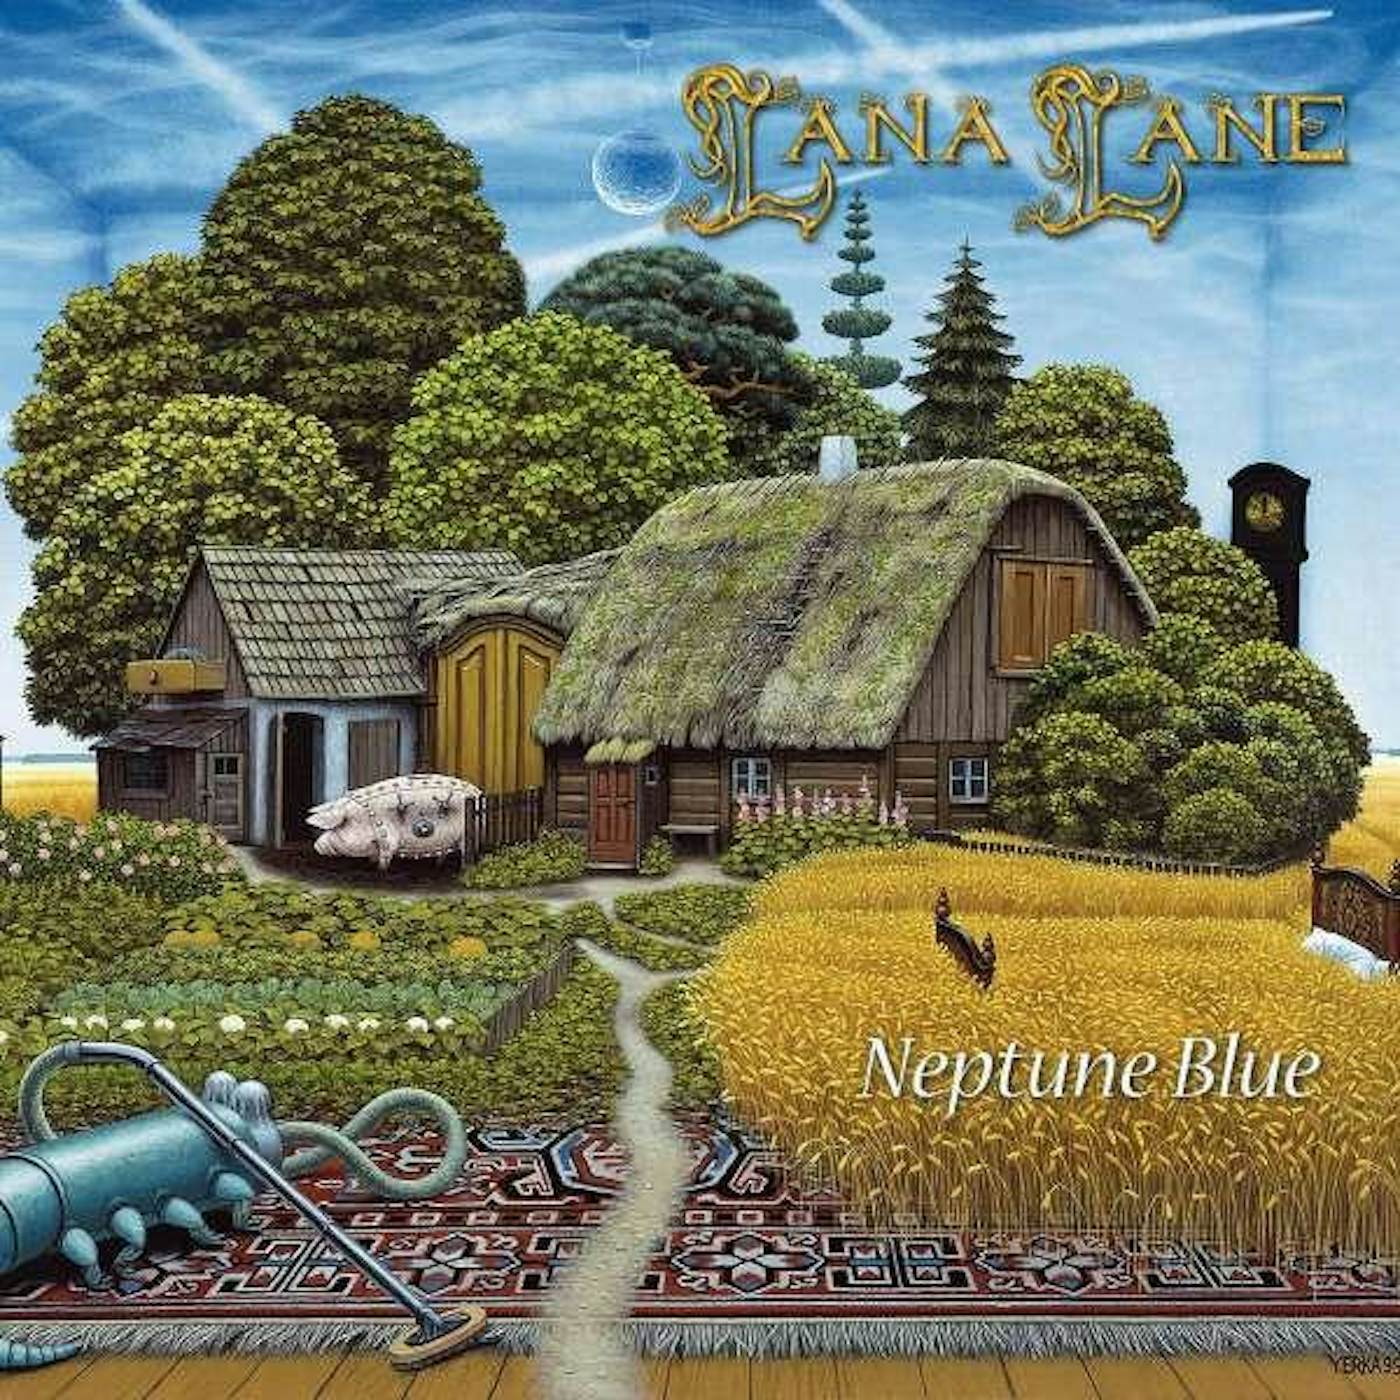 Lana Lane Neptune Blue (2LP) Vinyl Record